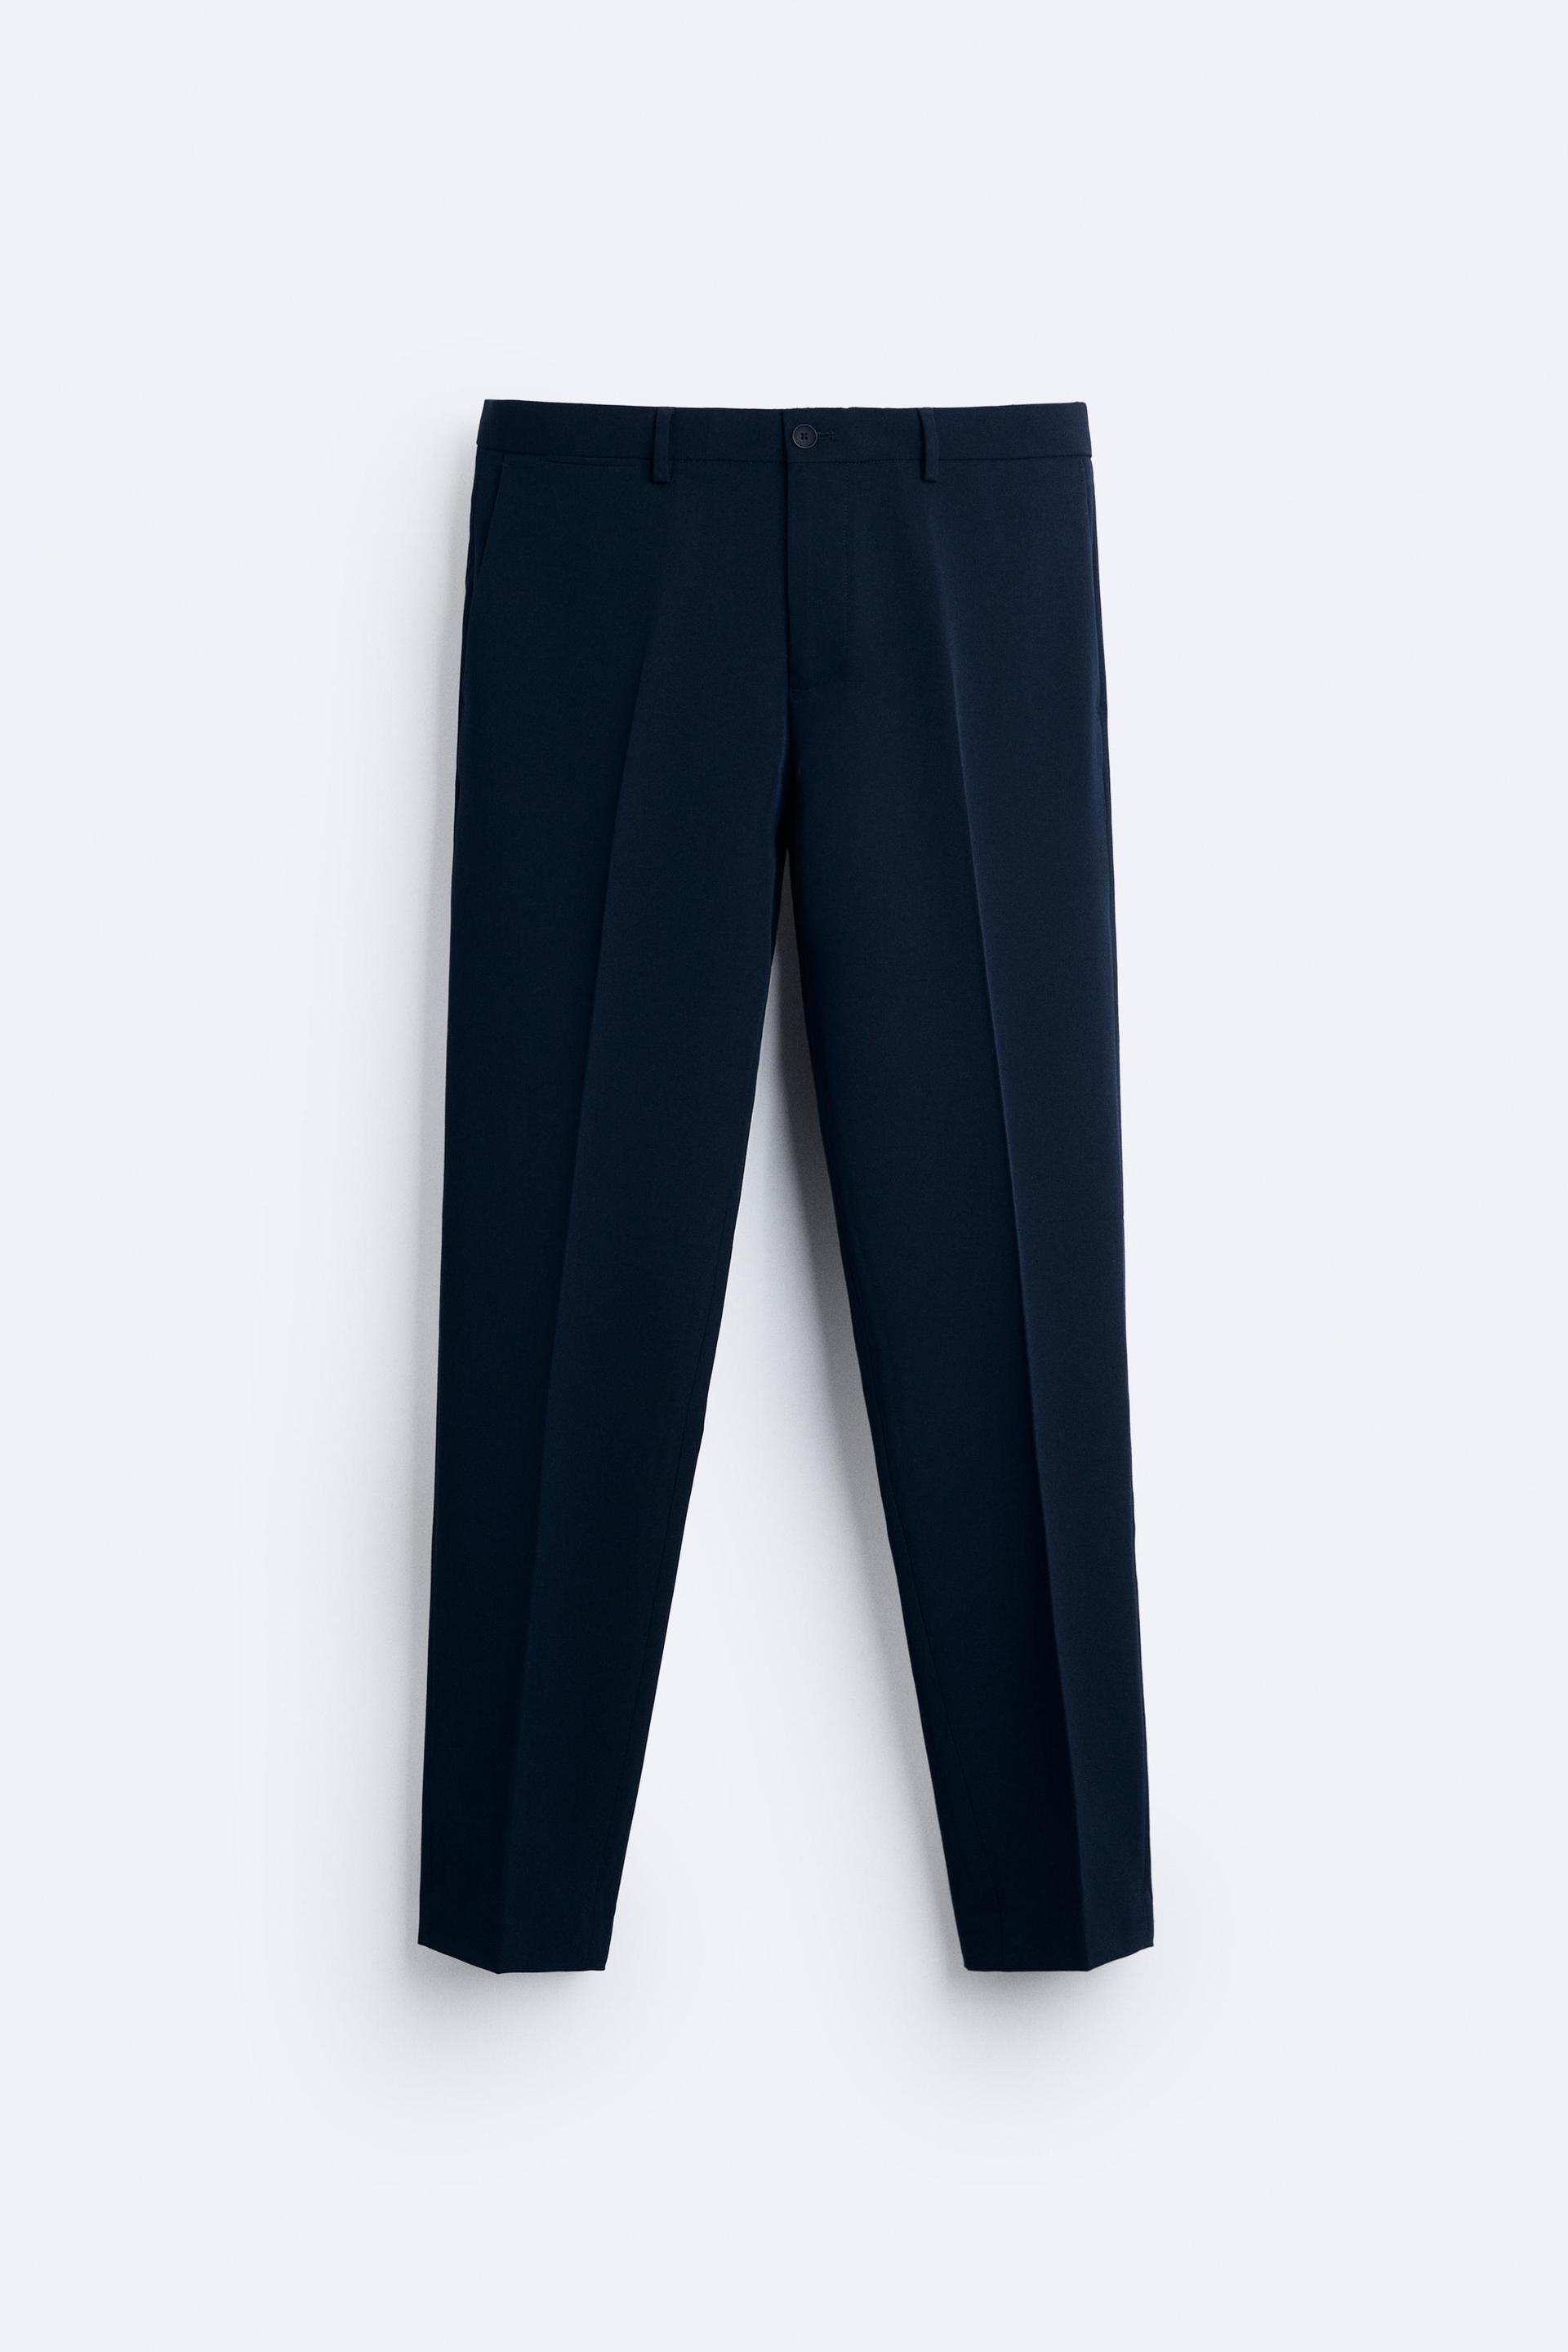 NWT ZARA MAN NAVY BLUE PANTS CHAIN DETAIL SUIT Zipper BE-STRETCH SIZE 31  #6635 $37.99 - PicClick